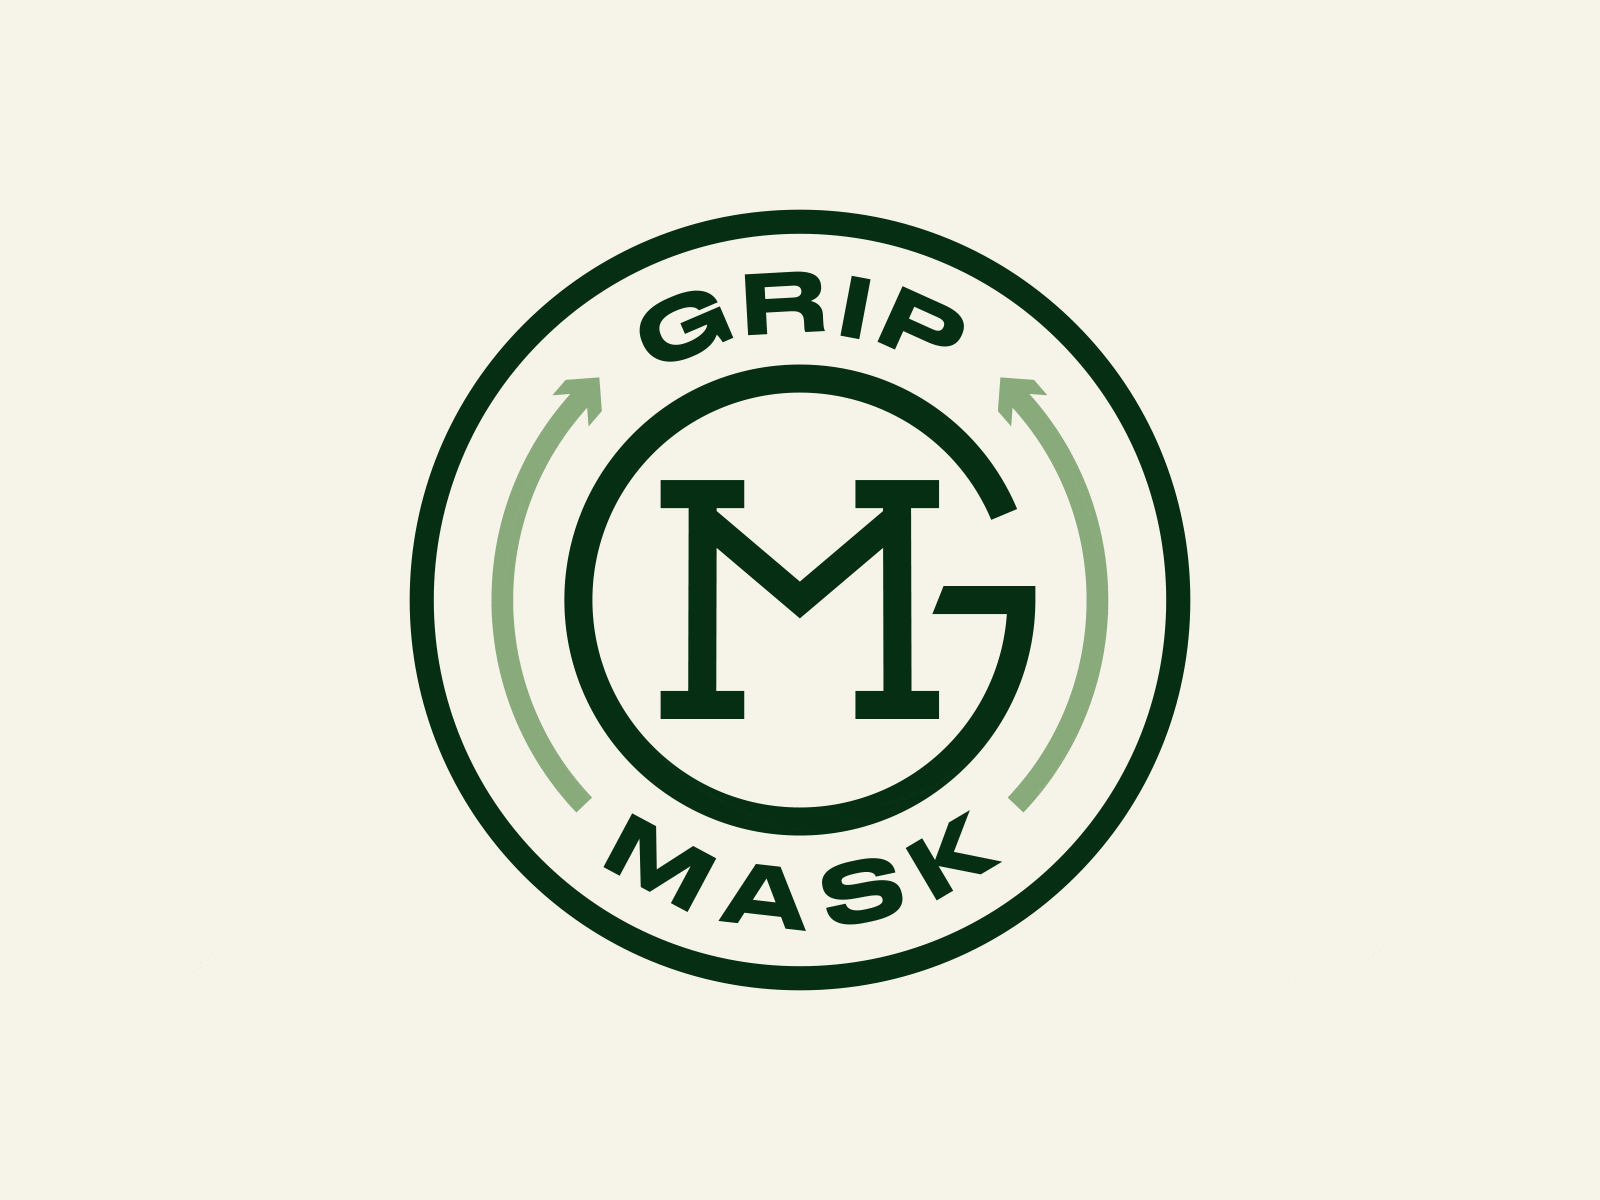 Grip Mask